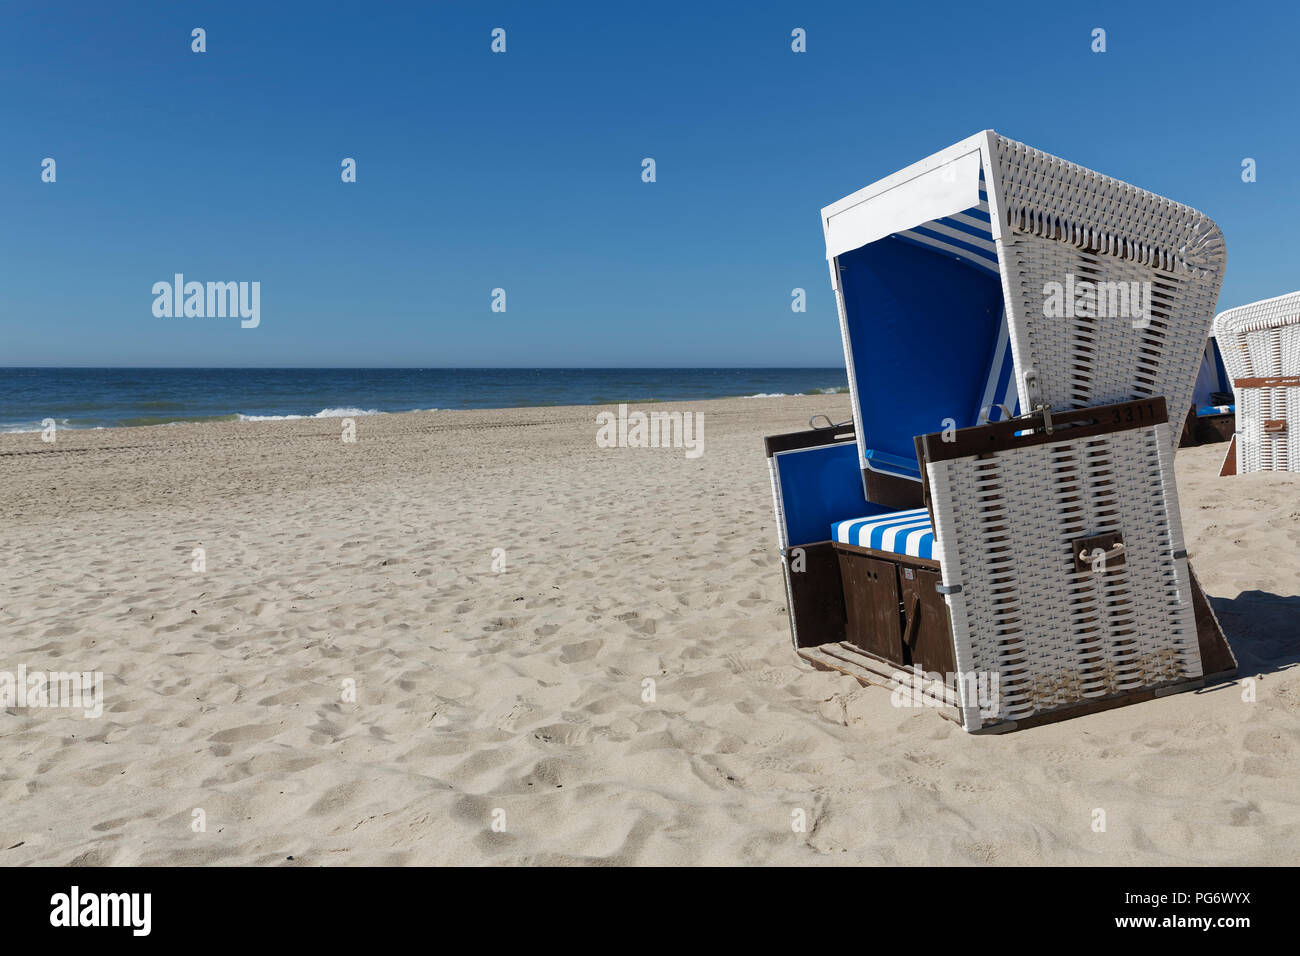 Germany, North Frisia, Sylt, Hooded beach chair at Rantum beach Stock Photo